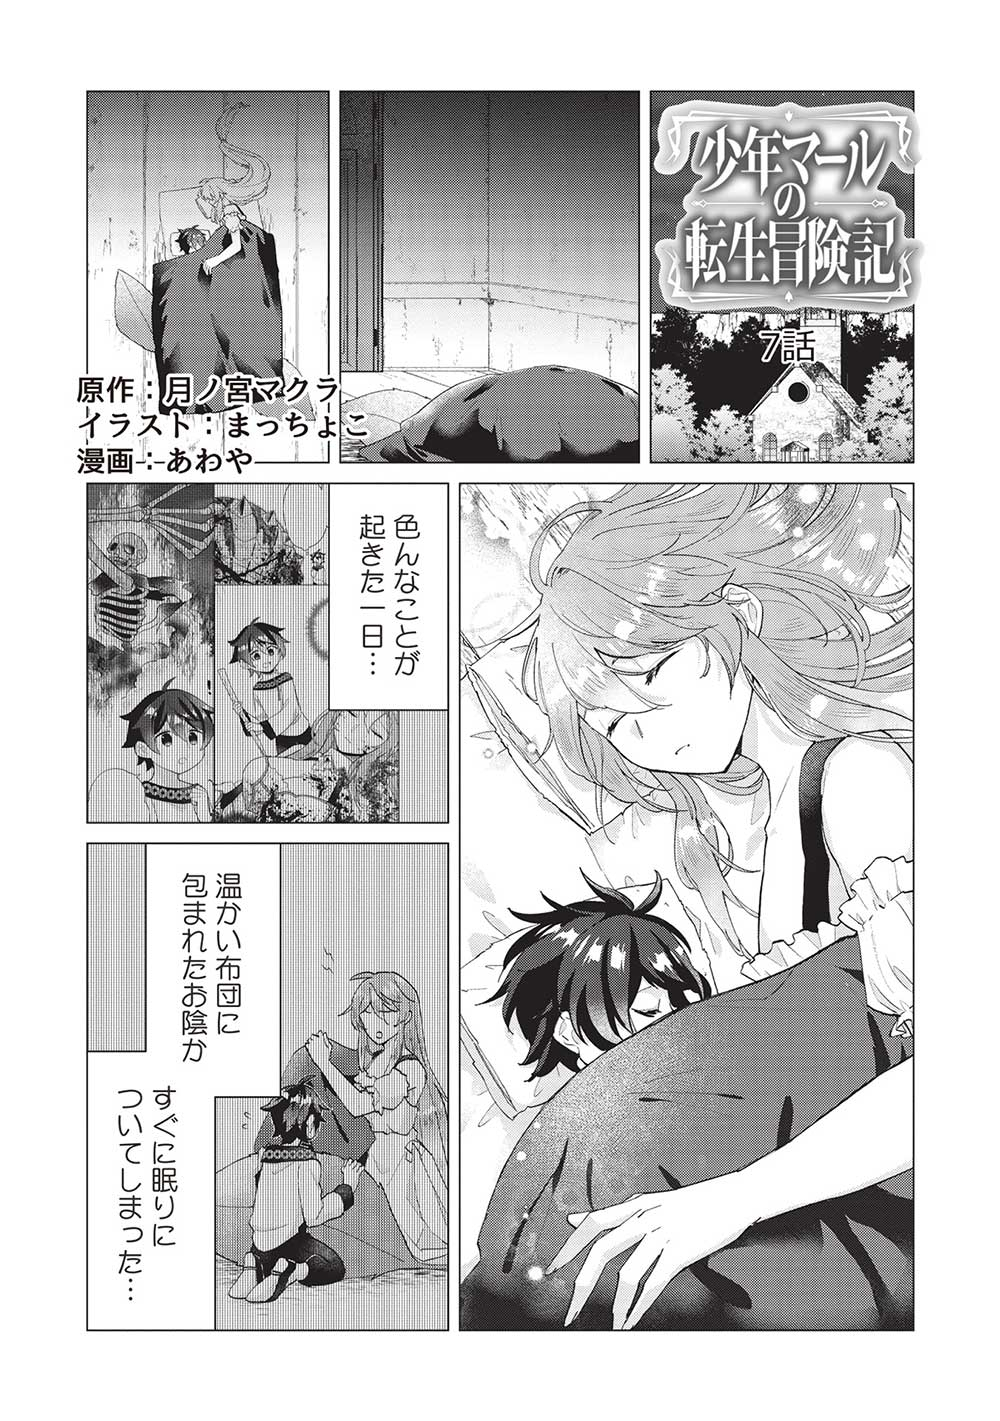 Shounen Marle no Tensei Boukenki - Chapter 7 - Page 1